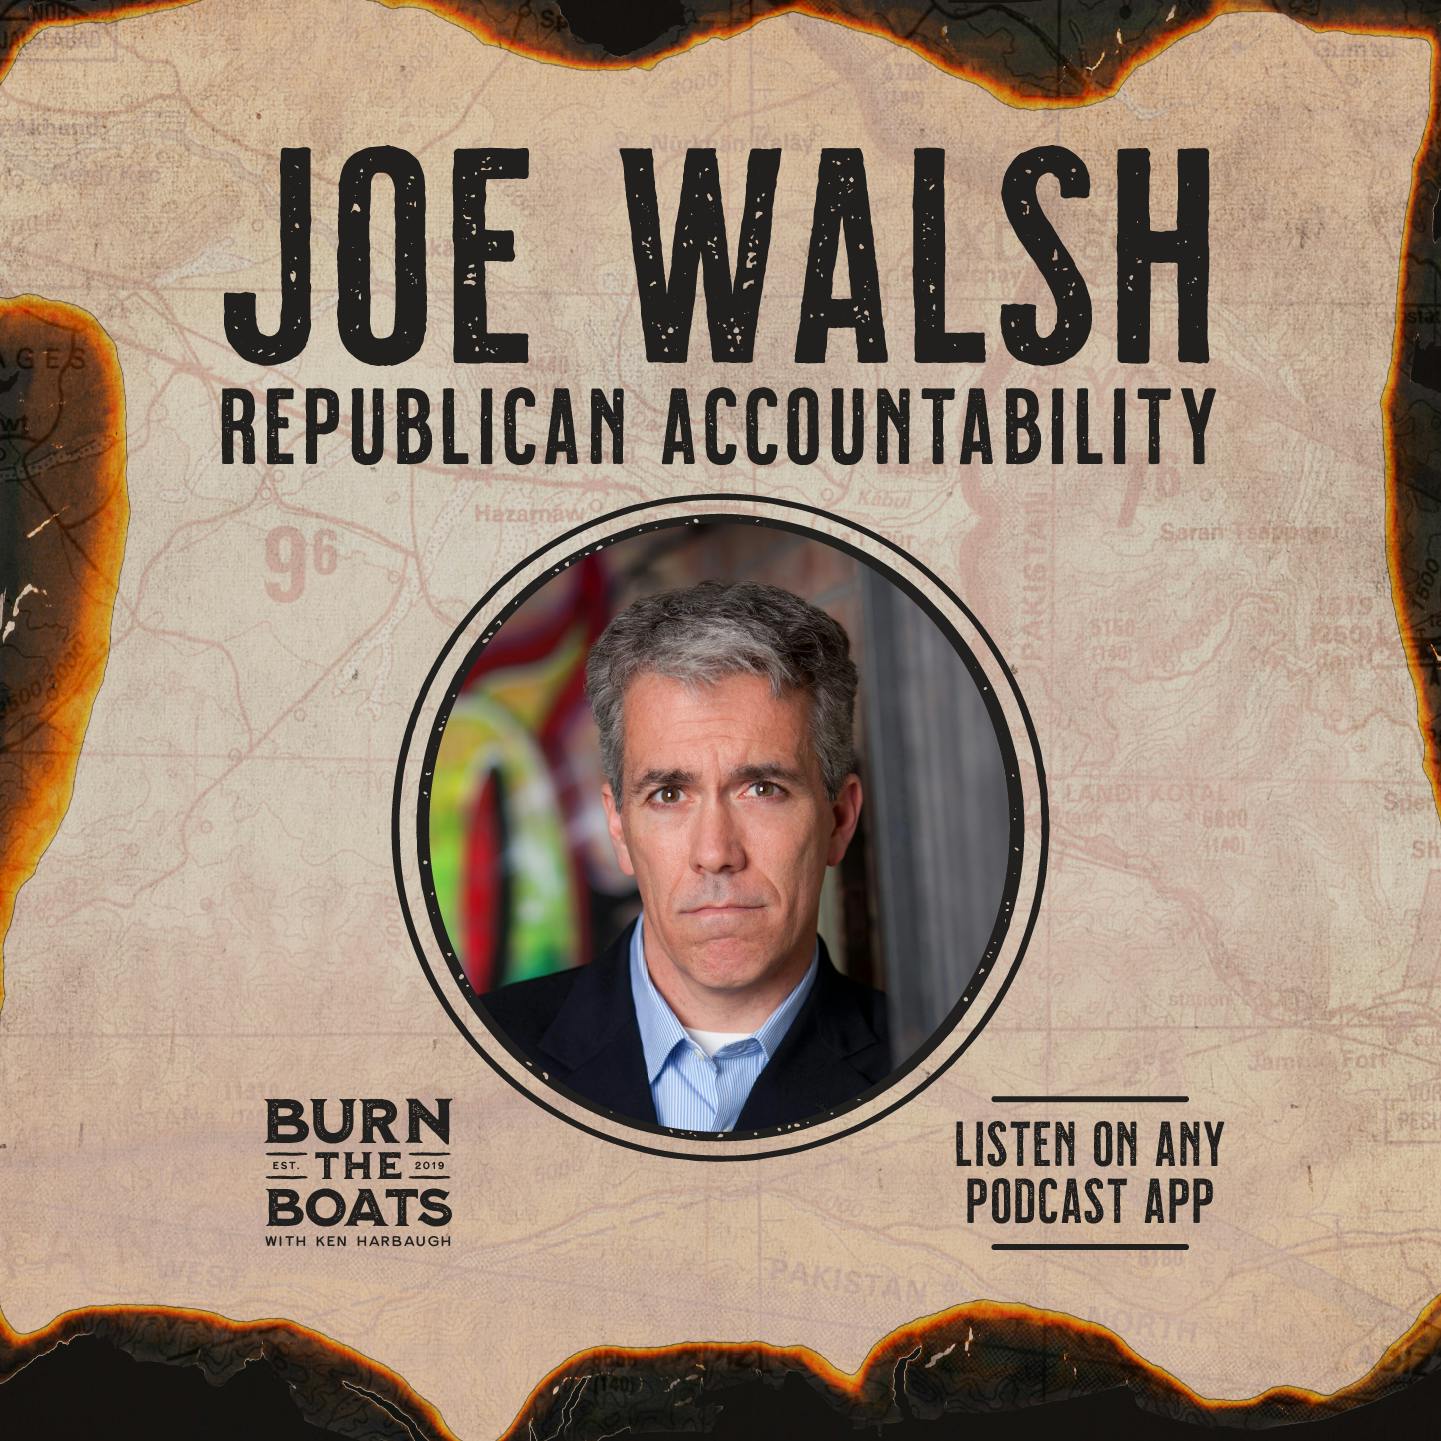 Joe Walsh: Republican Accountability